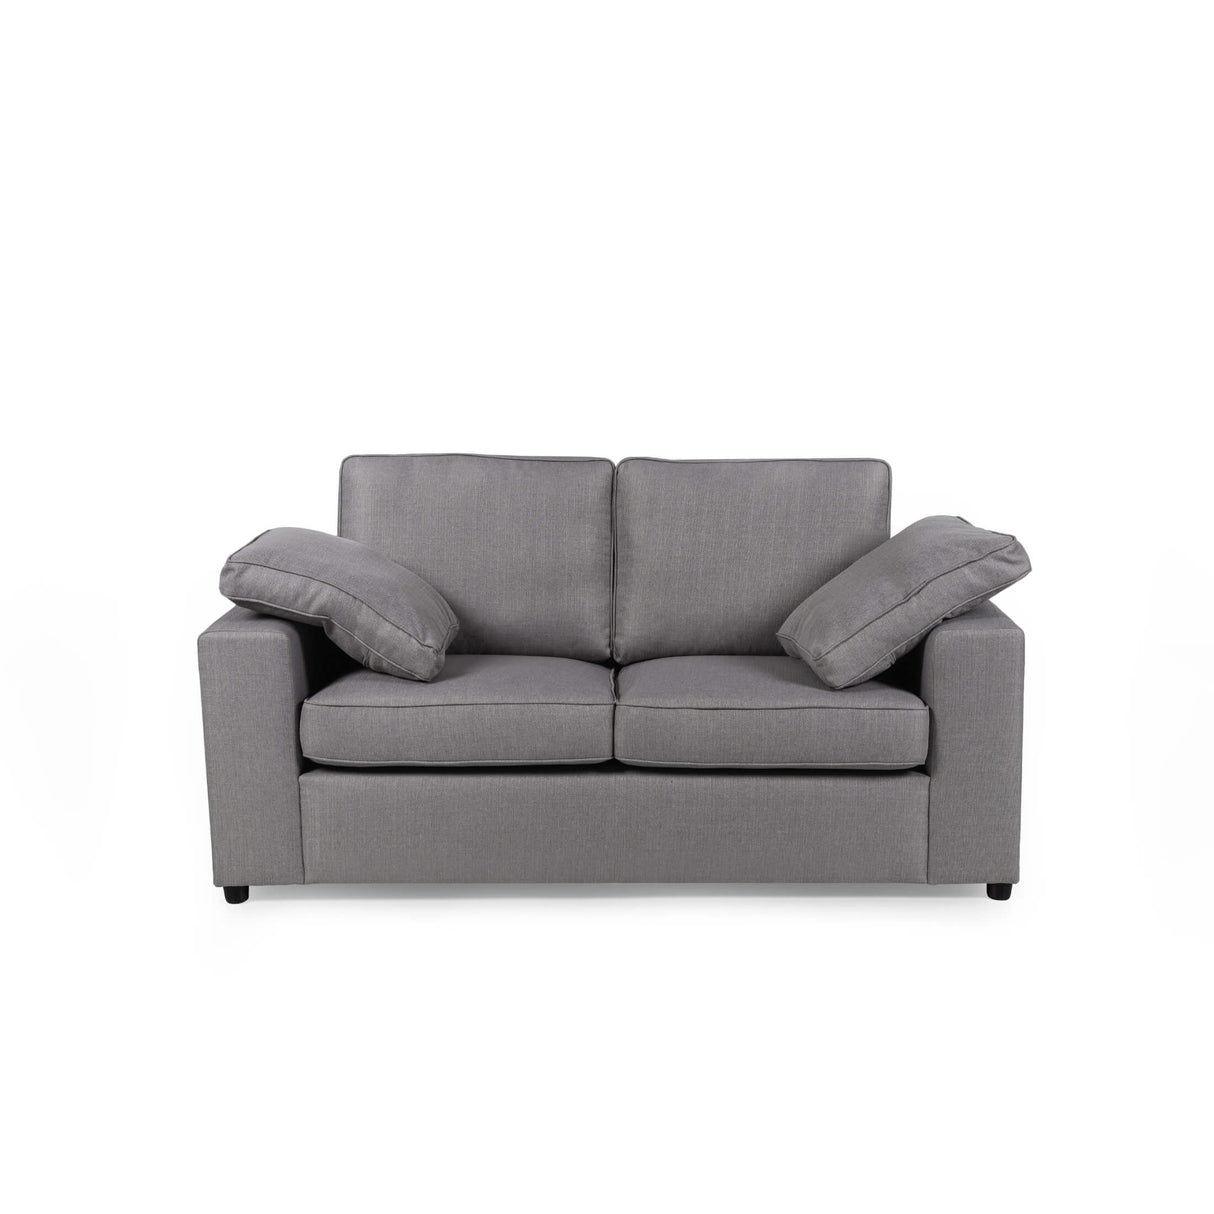 Alton Fabric Sofa 2 Seater Silver